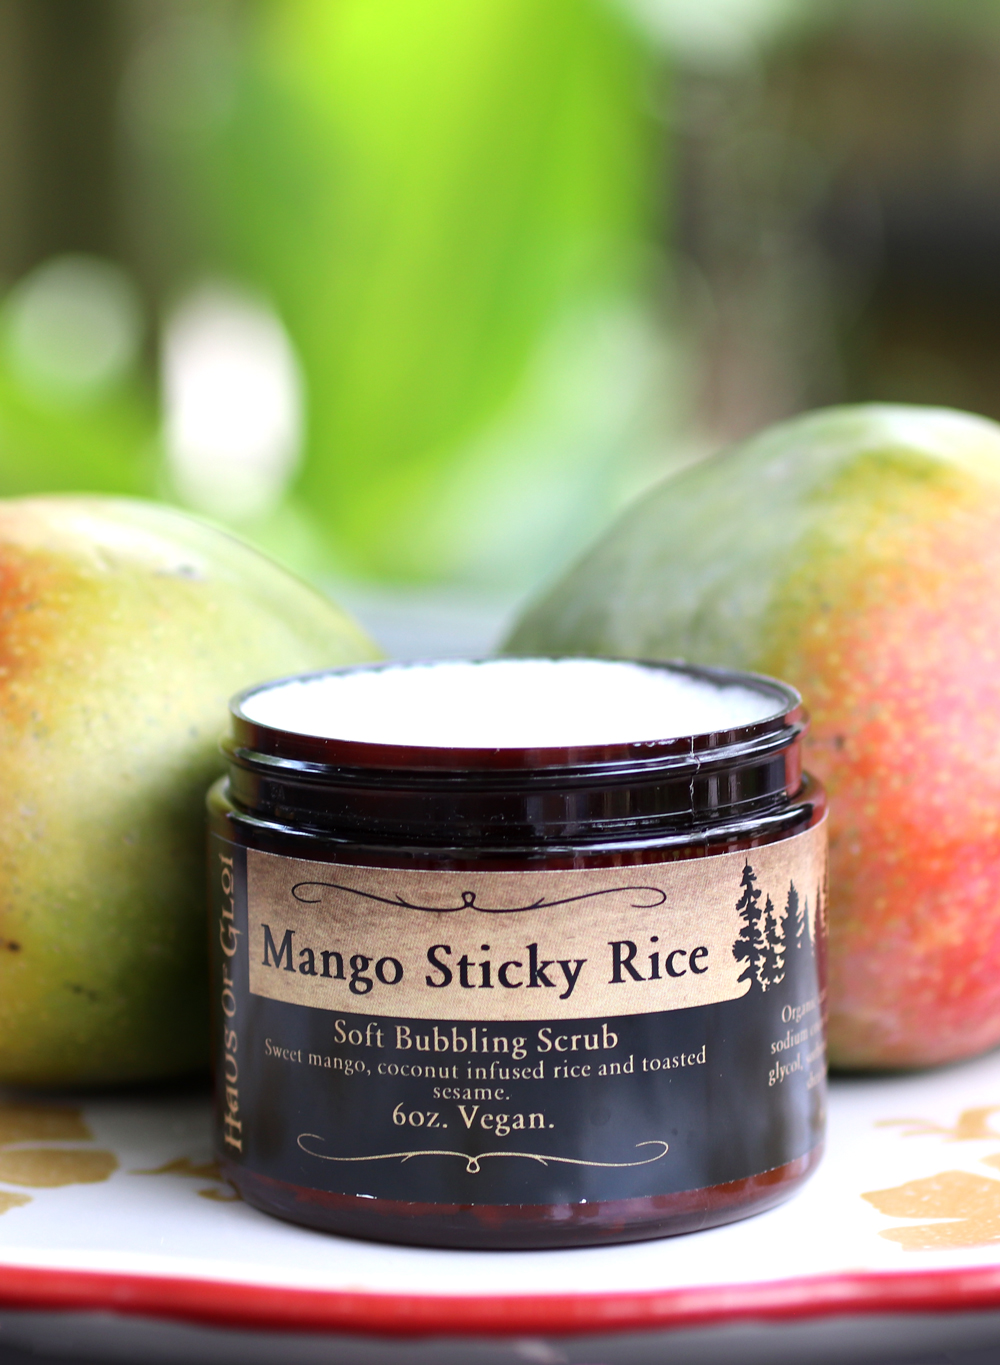 Haus of Gloi Mango Sticky Rice Soft Bubbling Scrub review